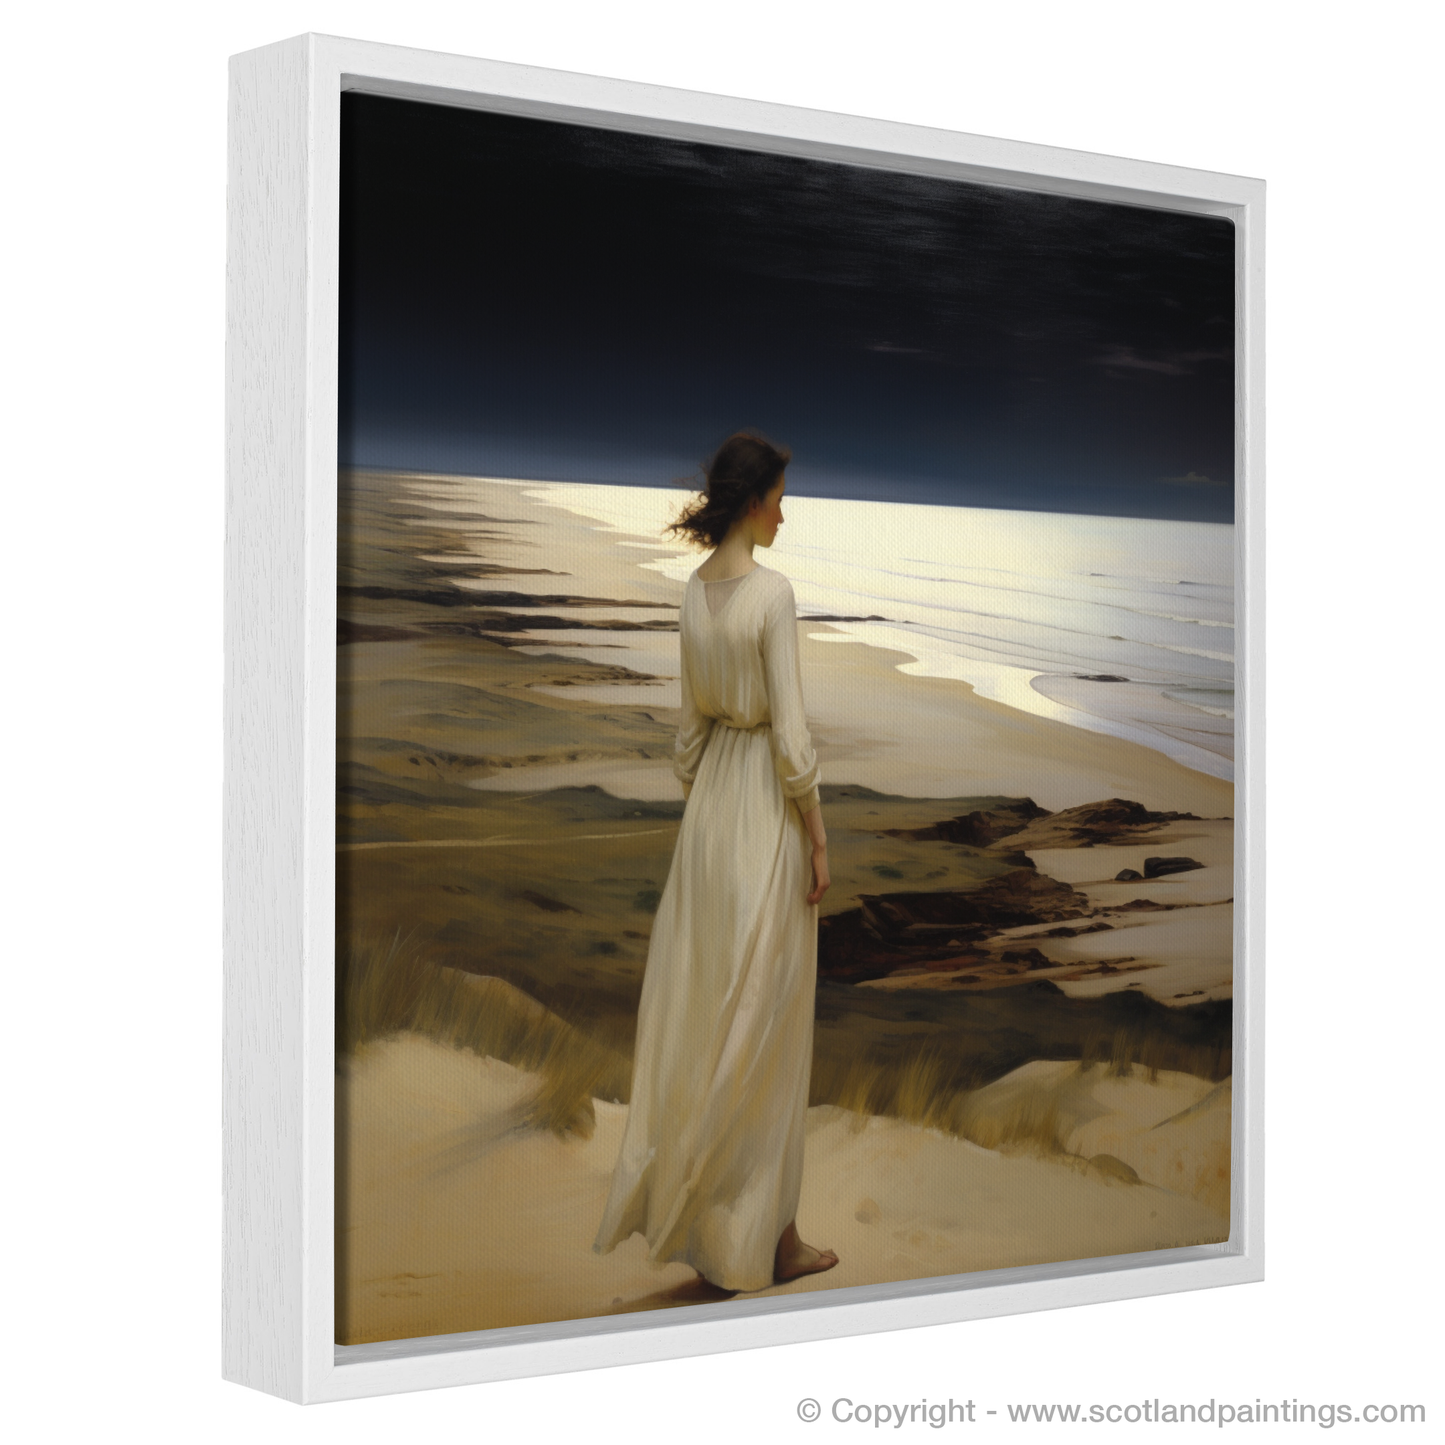 Solitude by the Sea: A Woman in White at Balmedie Beach